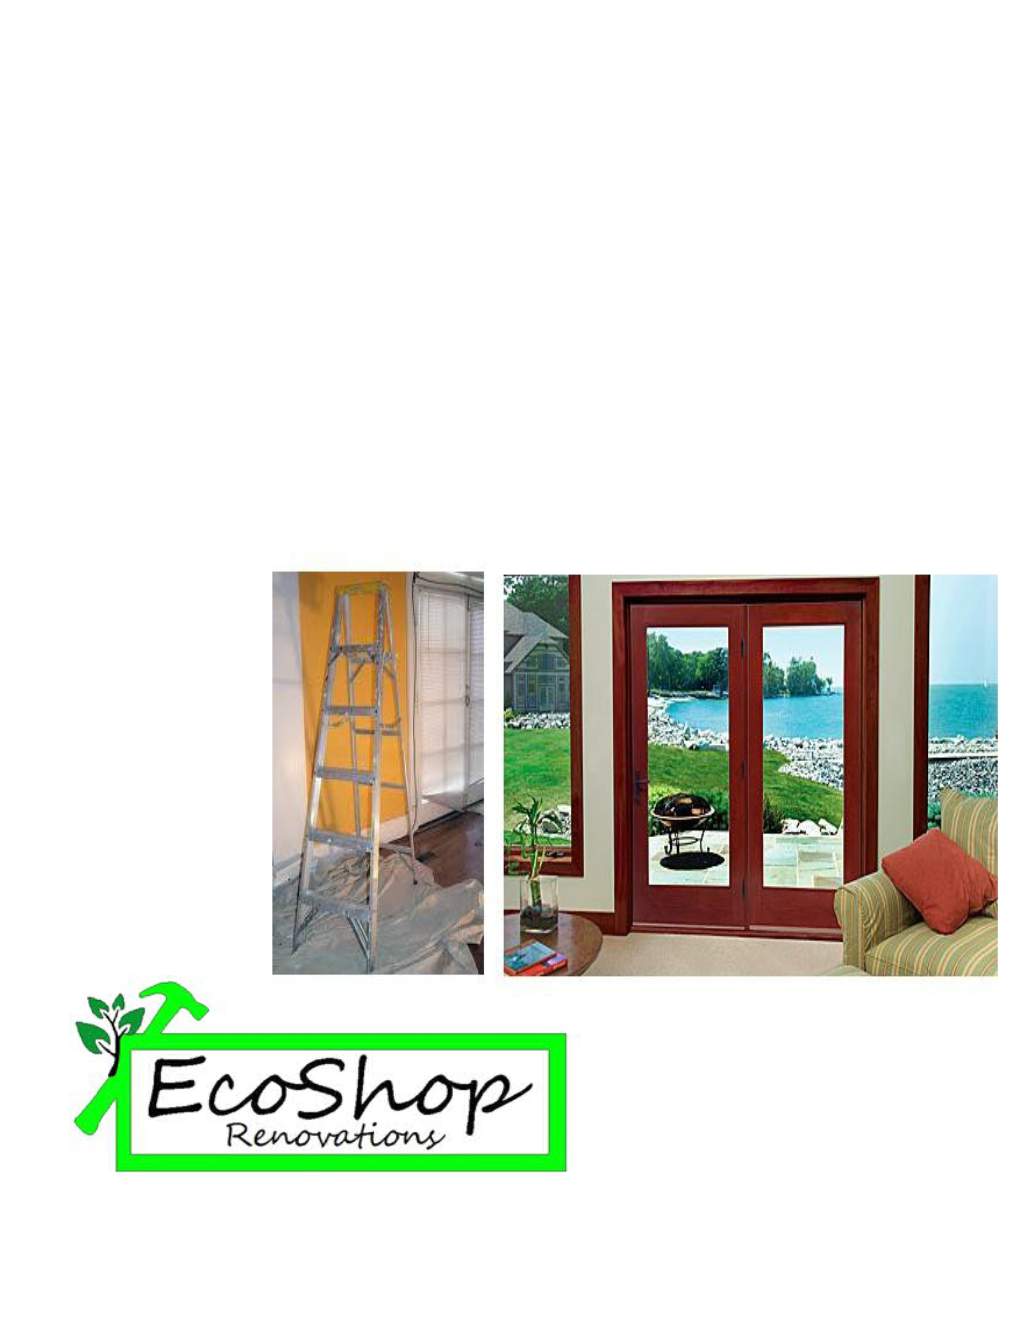 Ecoshop Renovations Business Plan